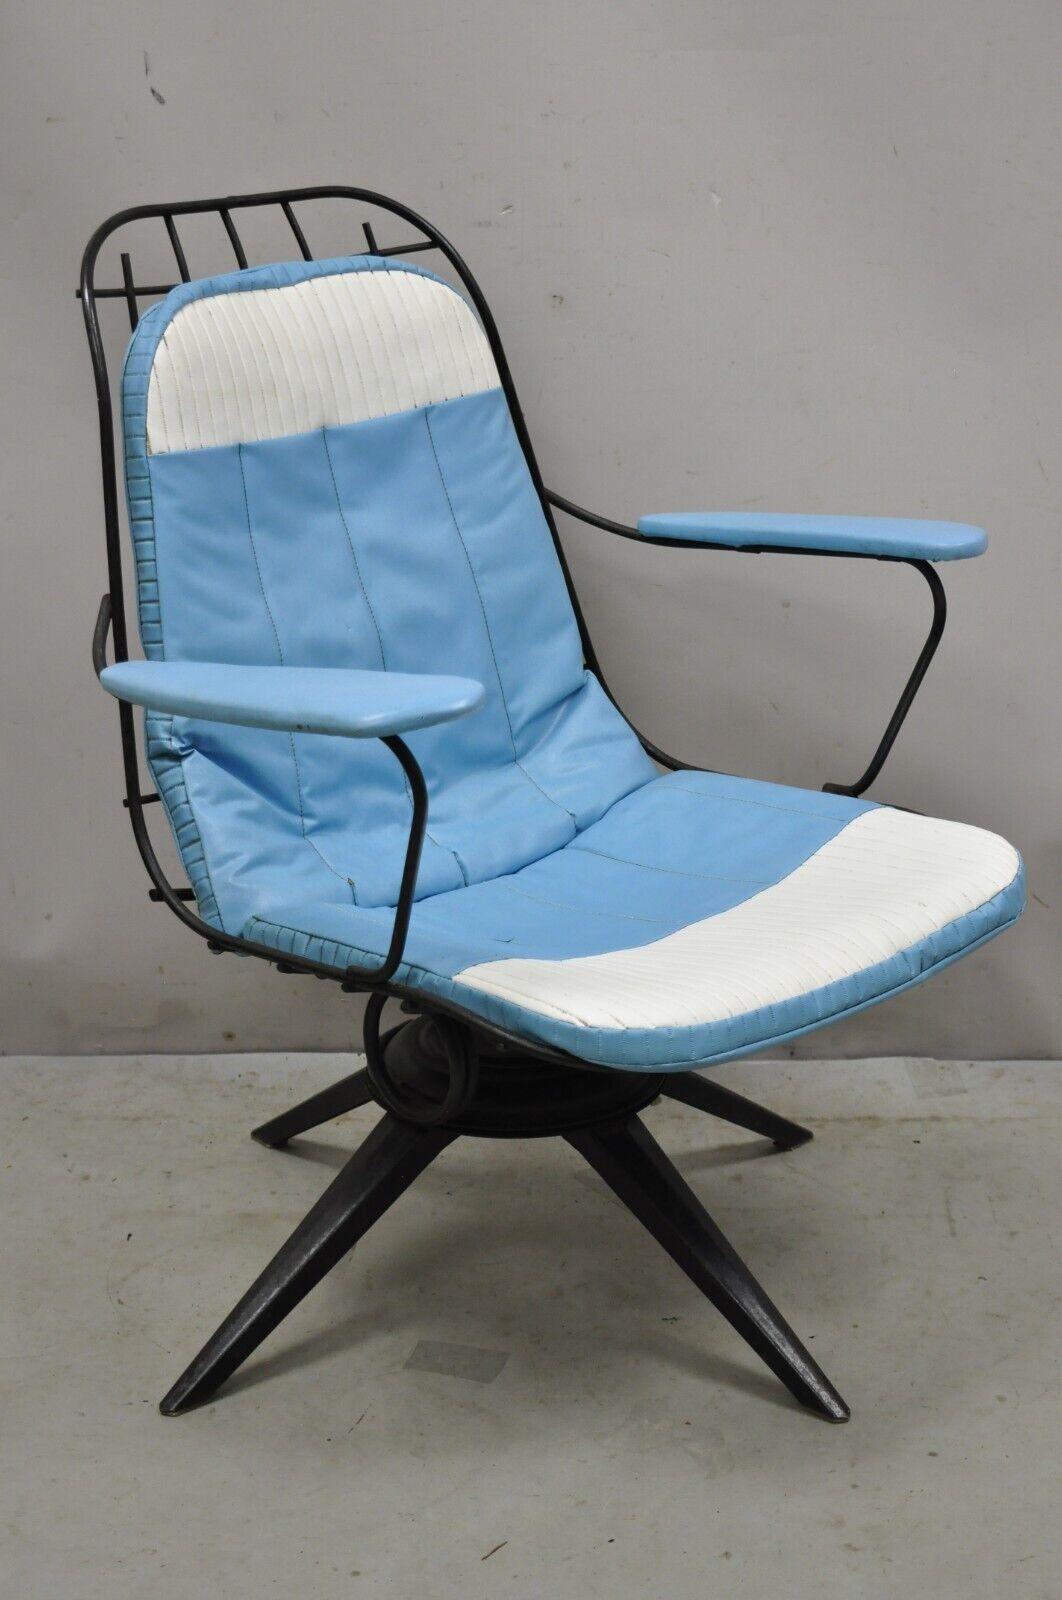 Vintage Homecrest B-25 Headliner Swivel Lounge Chair w/ Original Blue Cushion. Item features Original blue and white vinyl seat cushion, swivel base, metal frame, upholstered armrests, original label, very nice vintage item. Mid-20th Century.